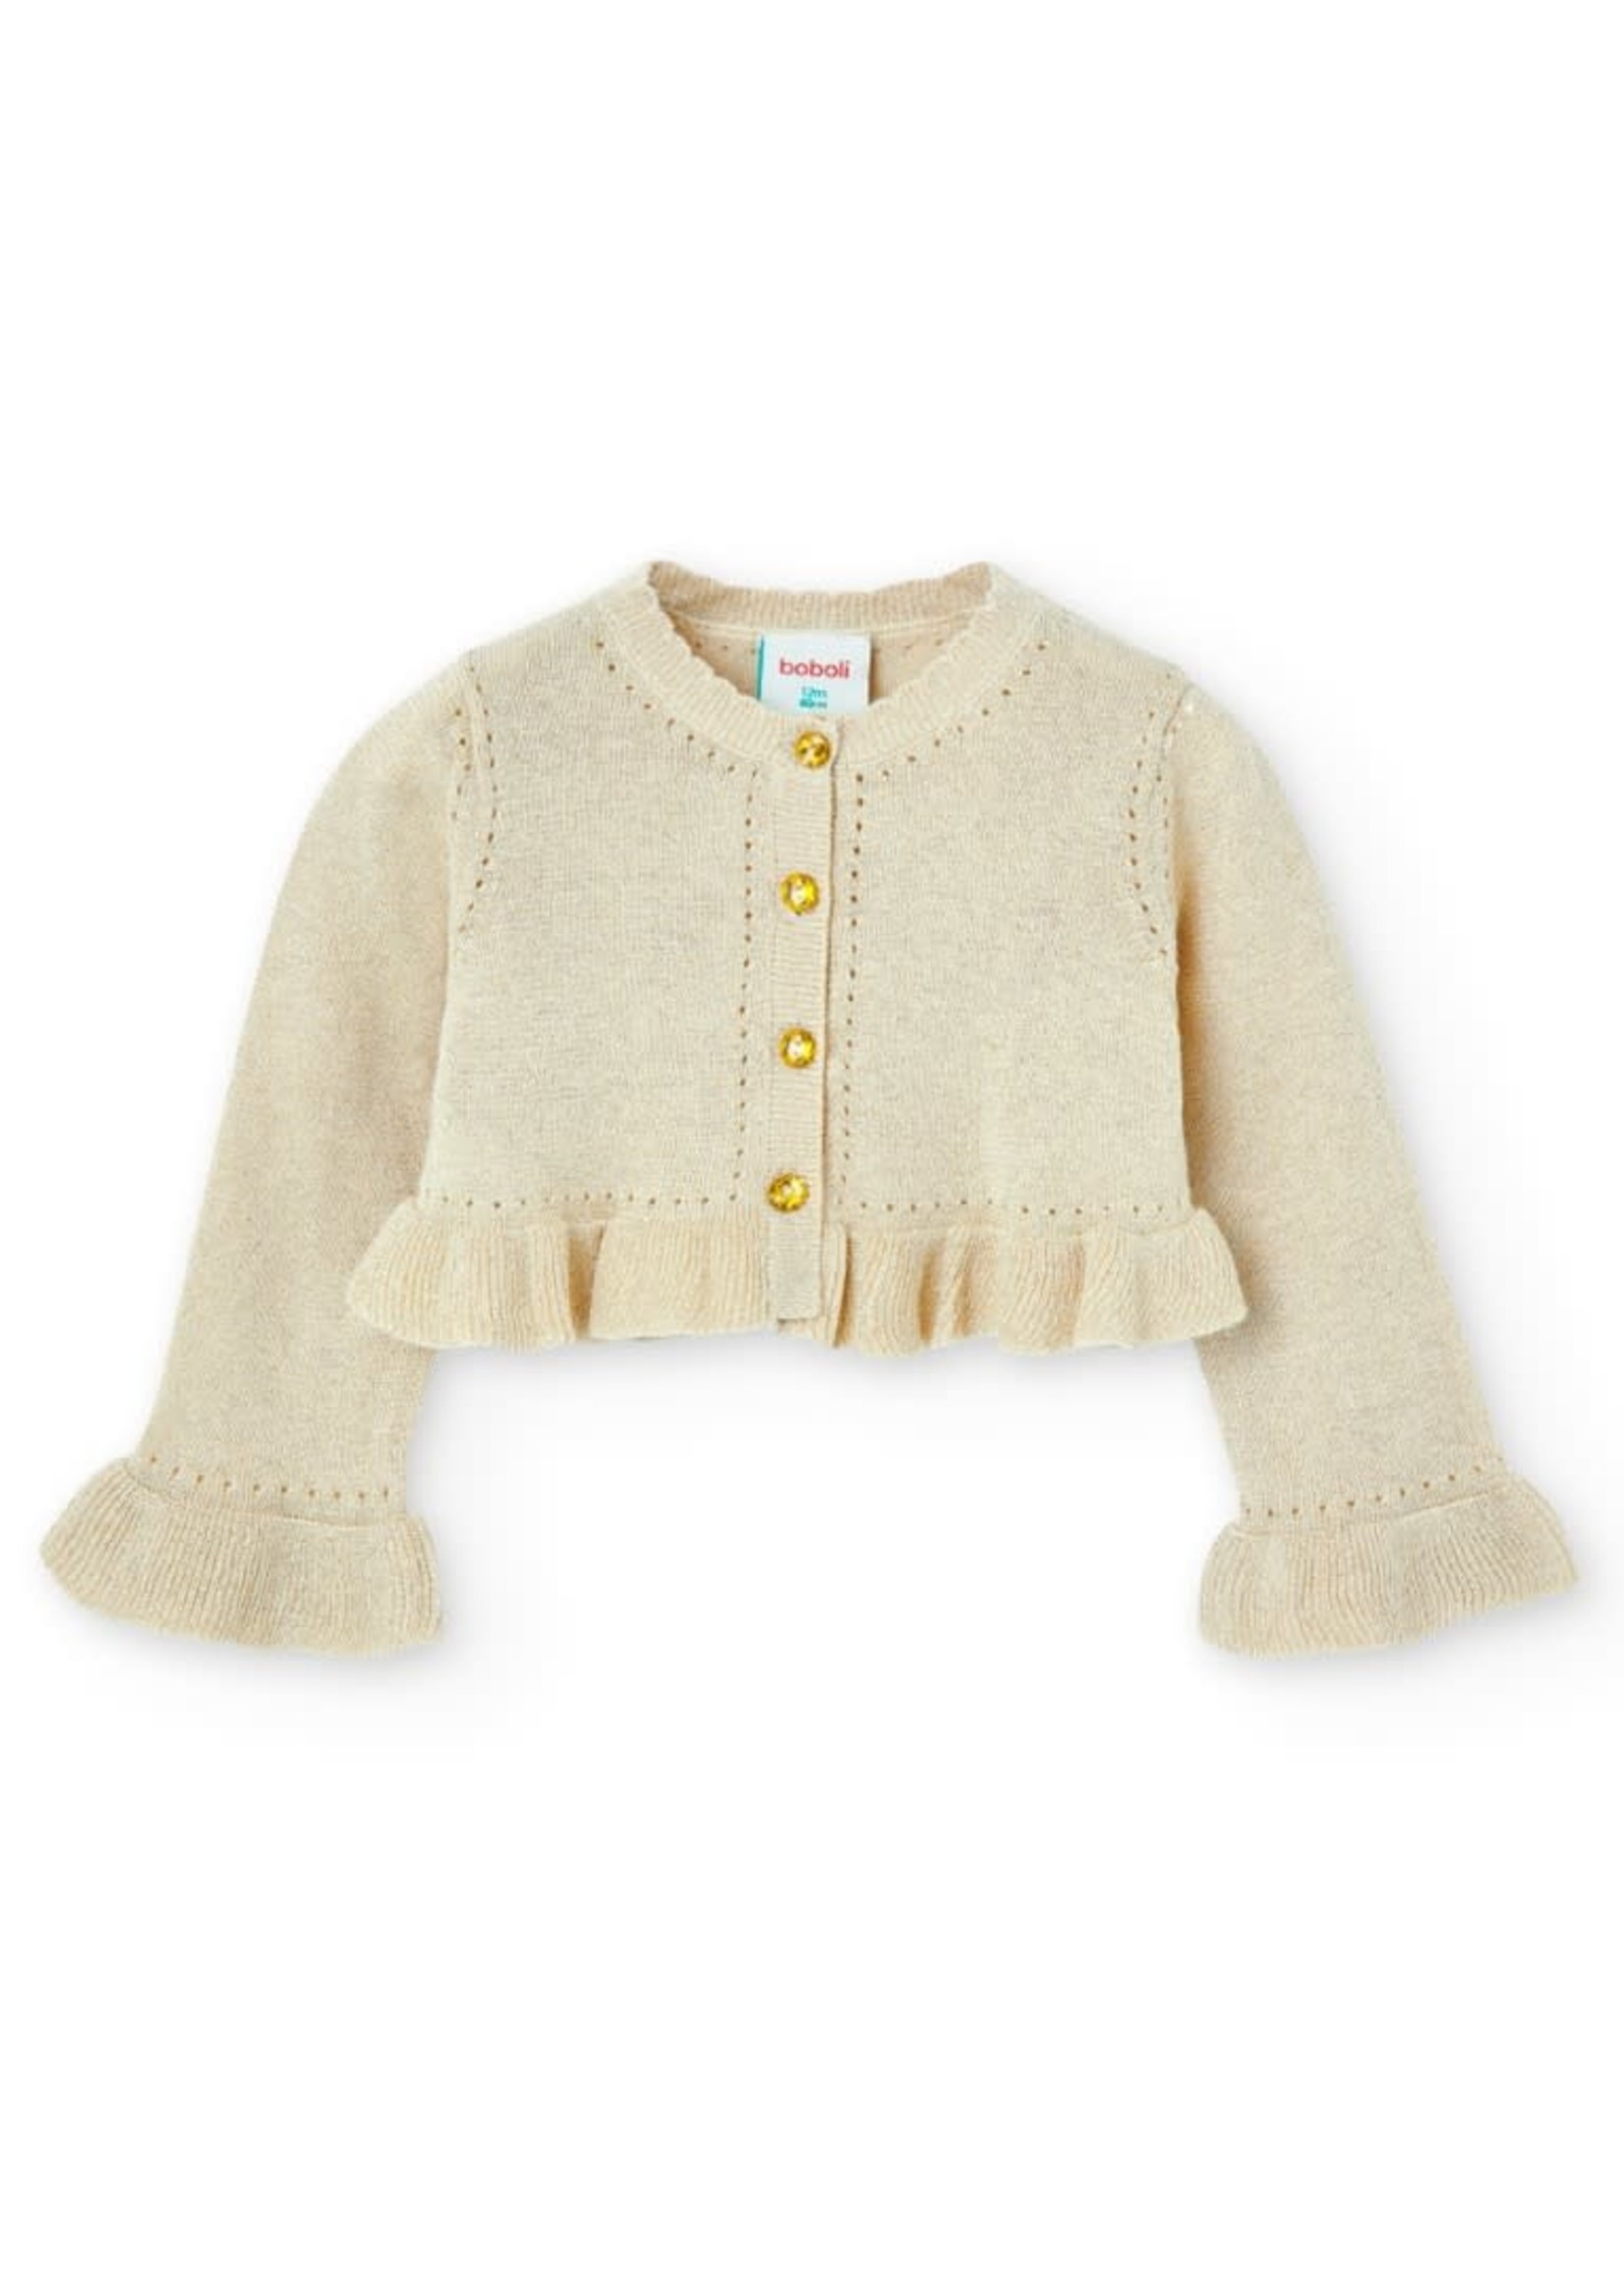 Boboli Knitwear jacket for baby girl SAND 706036B